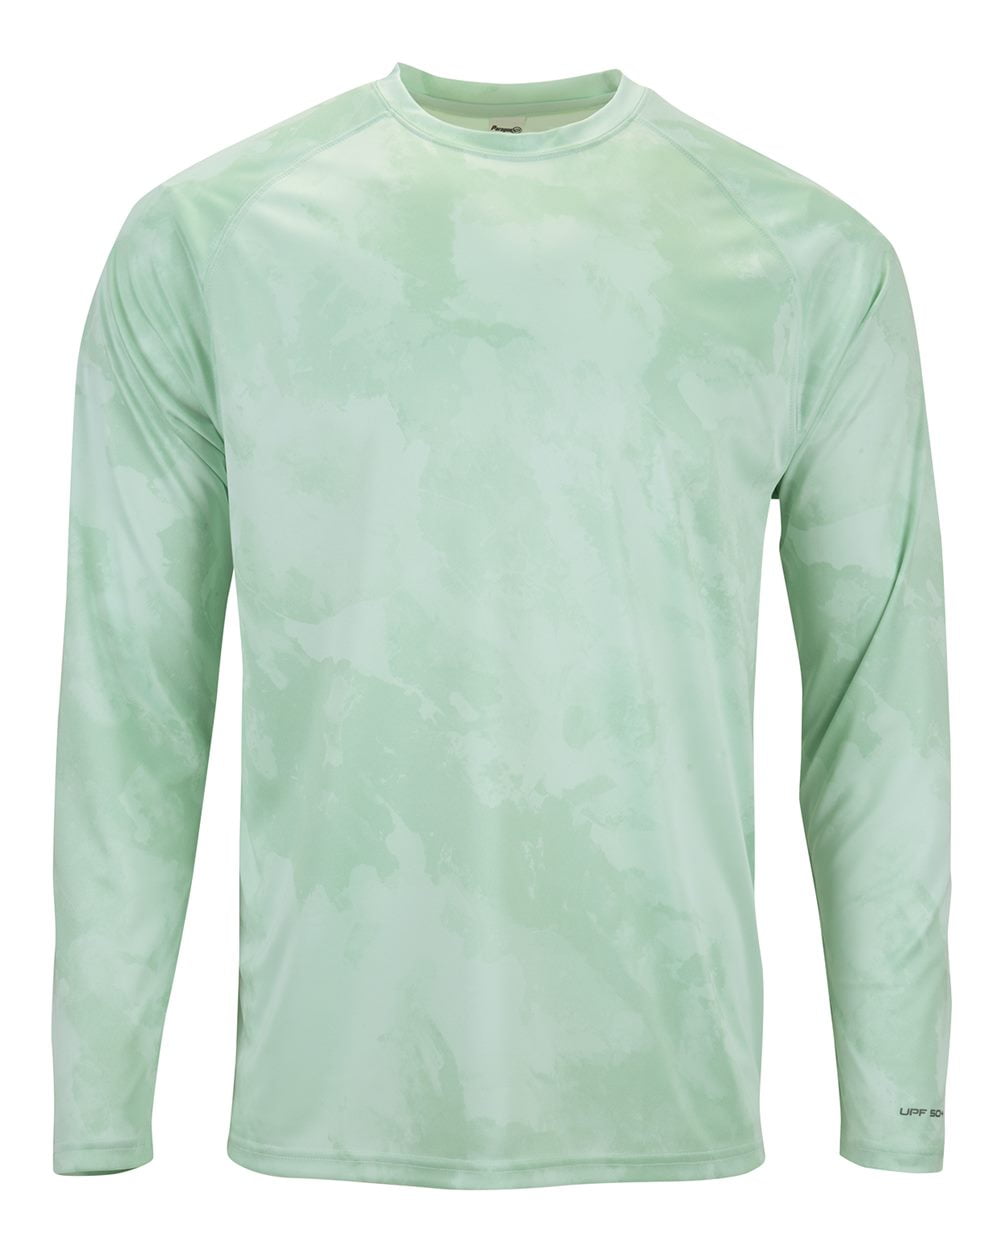 Paragon Cabo Camo Performance Long Sleeve T-Shirt, Mint Green - S 